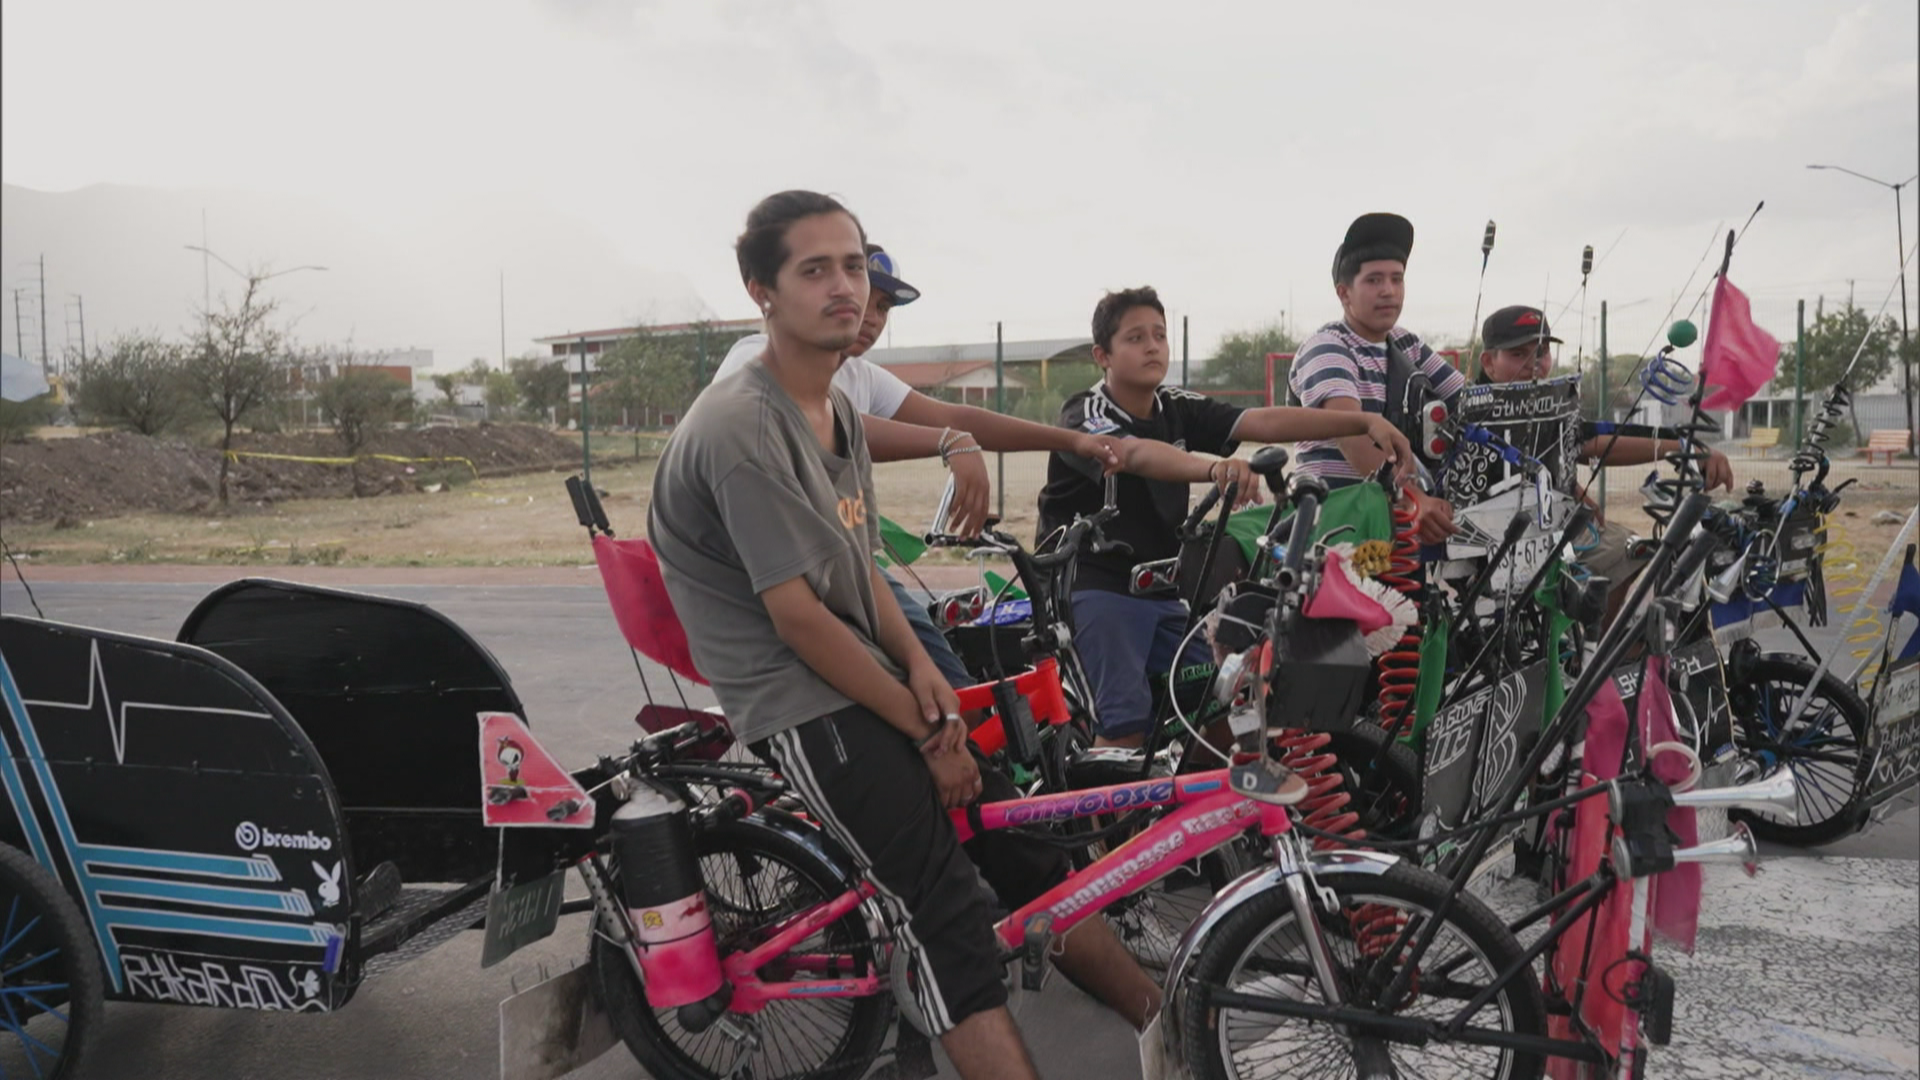 The bike tuning scene in Mexico